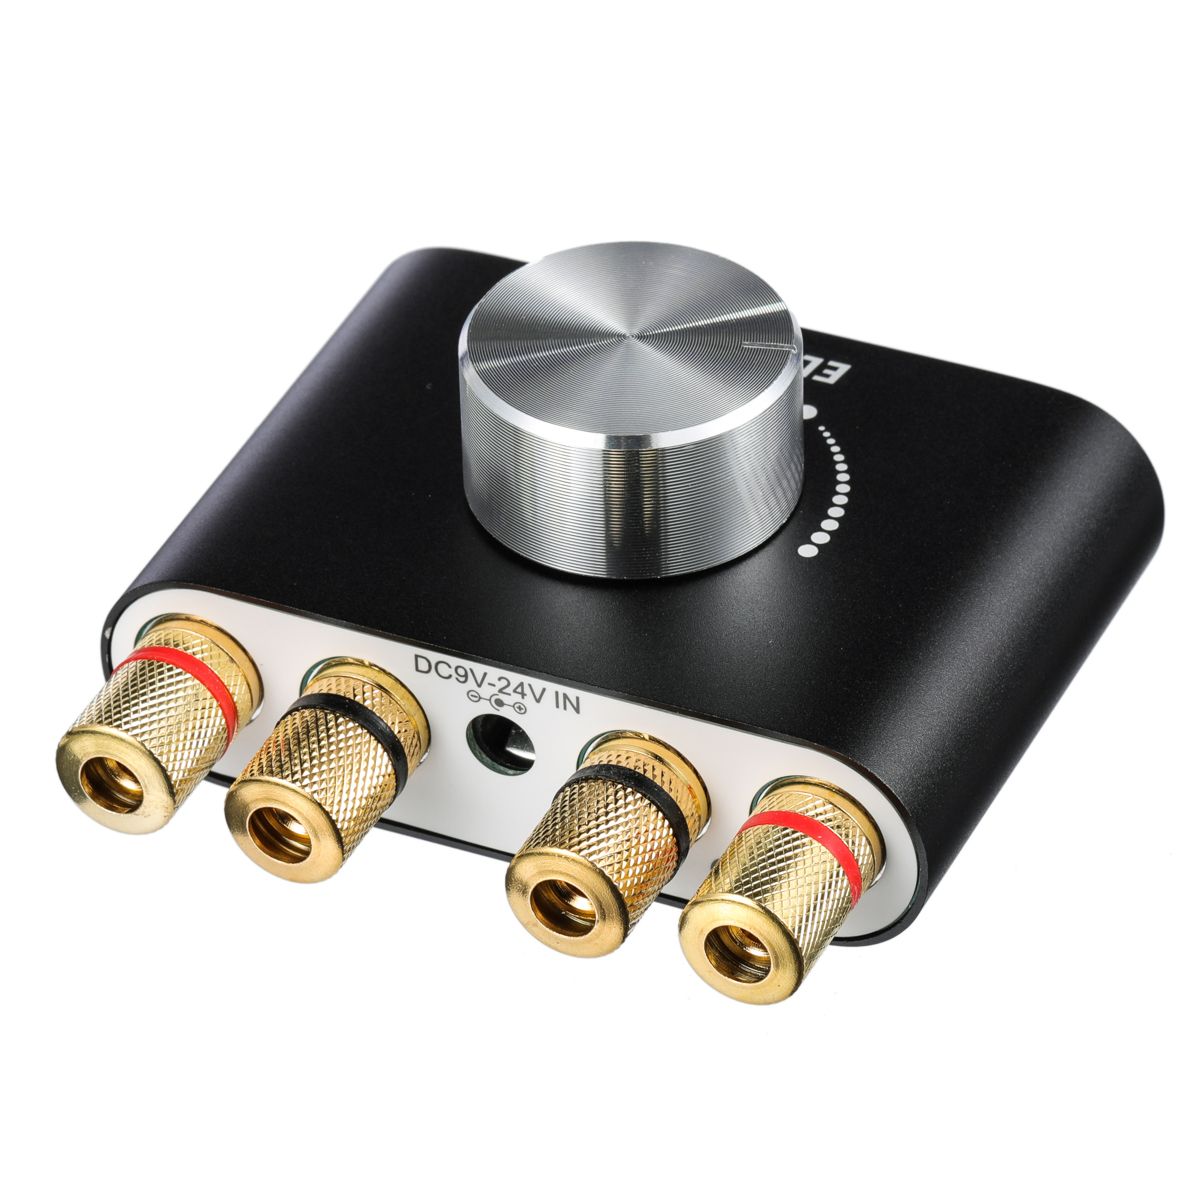 Mini-bluetooth-Digital-Power-Amplifier-Audio-Stereo-High-Bass-Speaker-100W-DC9V-24V-US-Plug-1461967